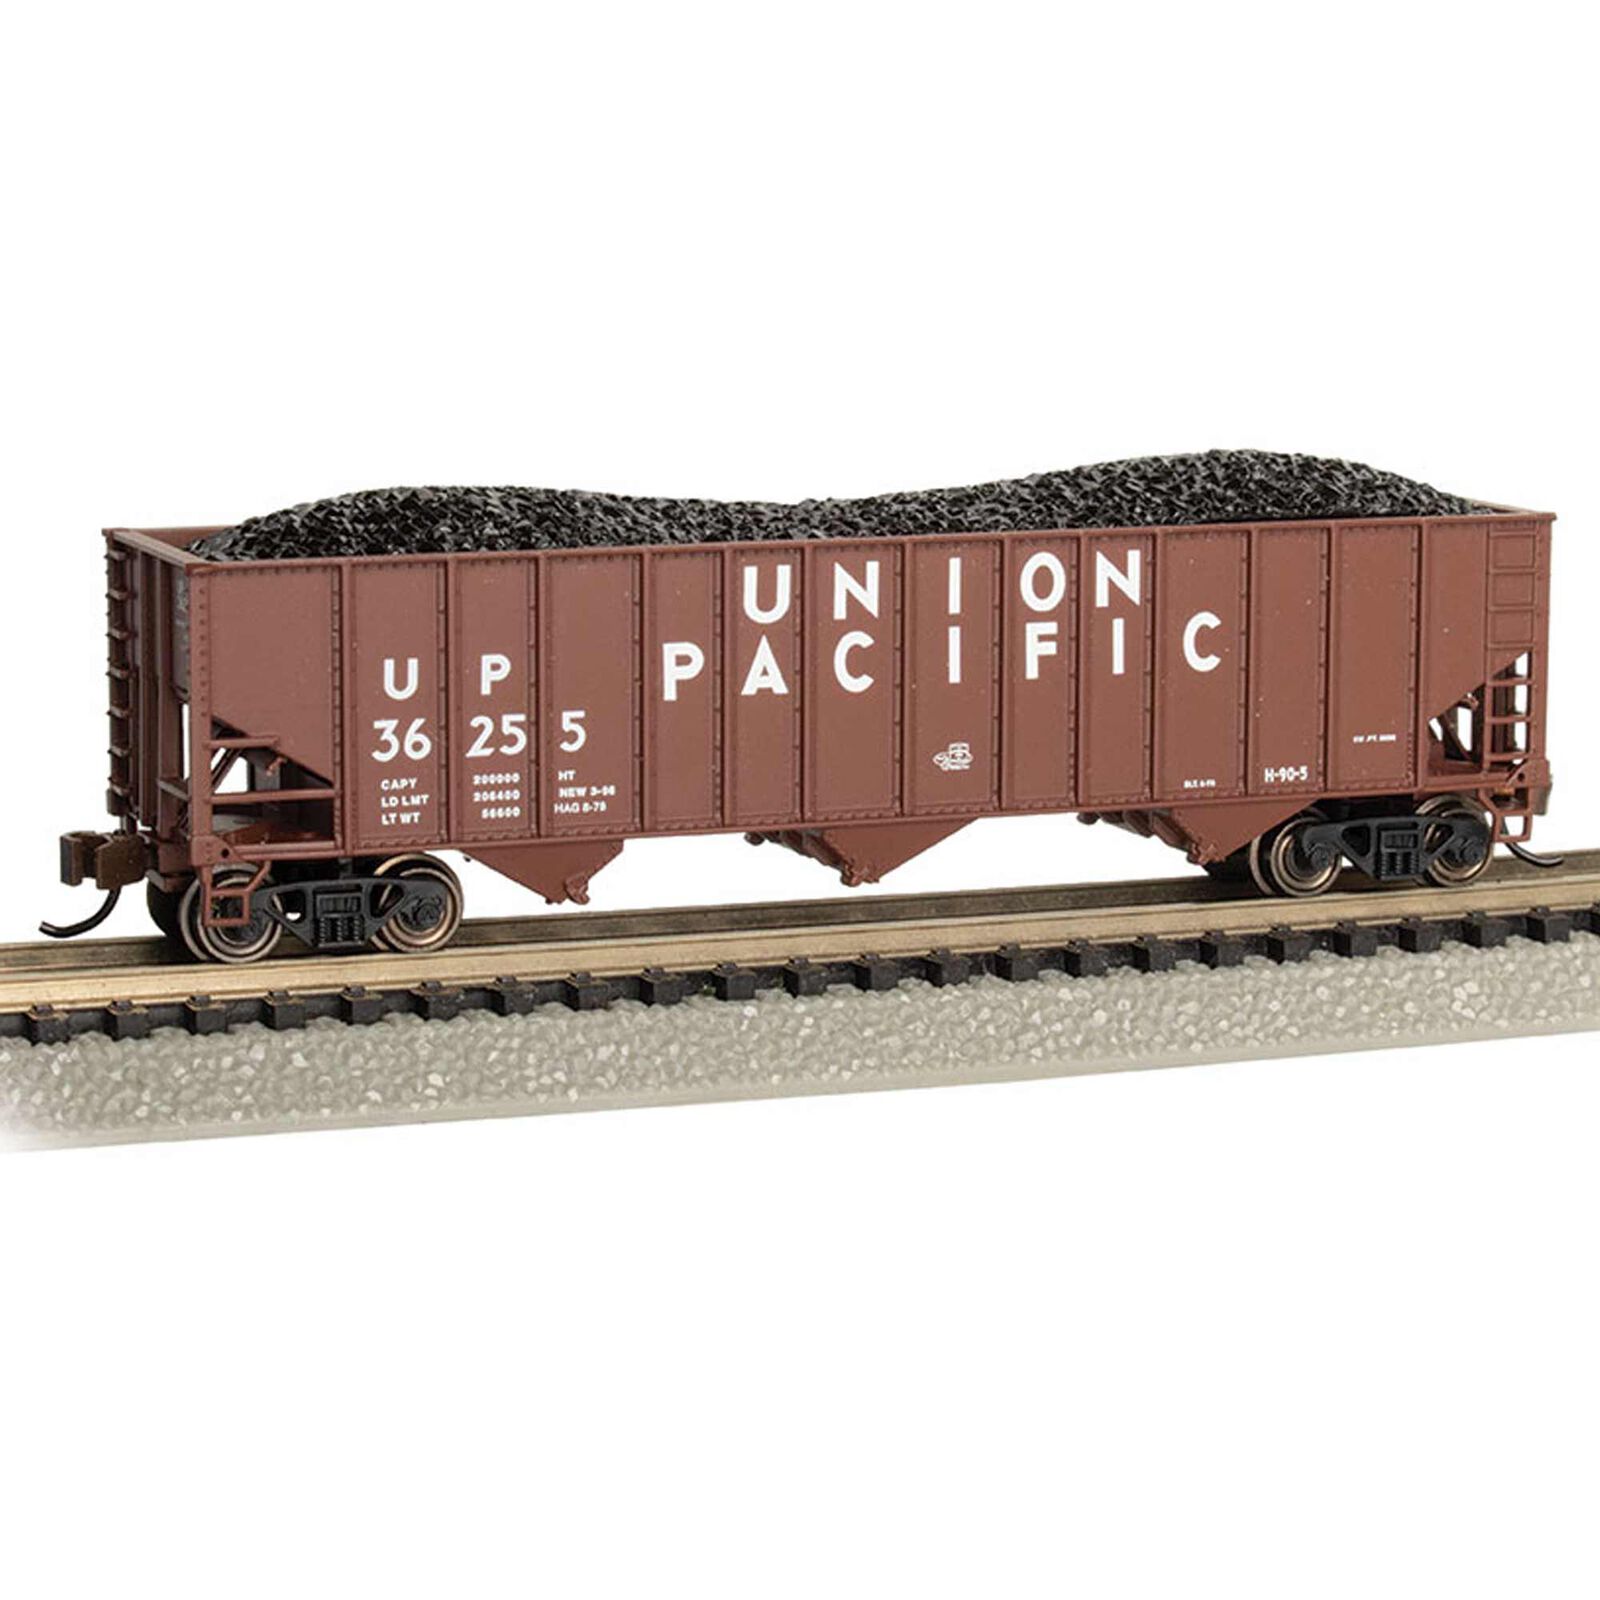 Union Pacific #36255